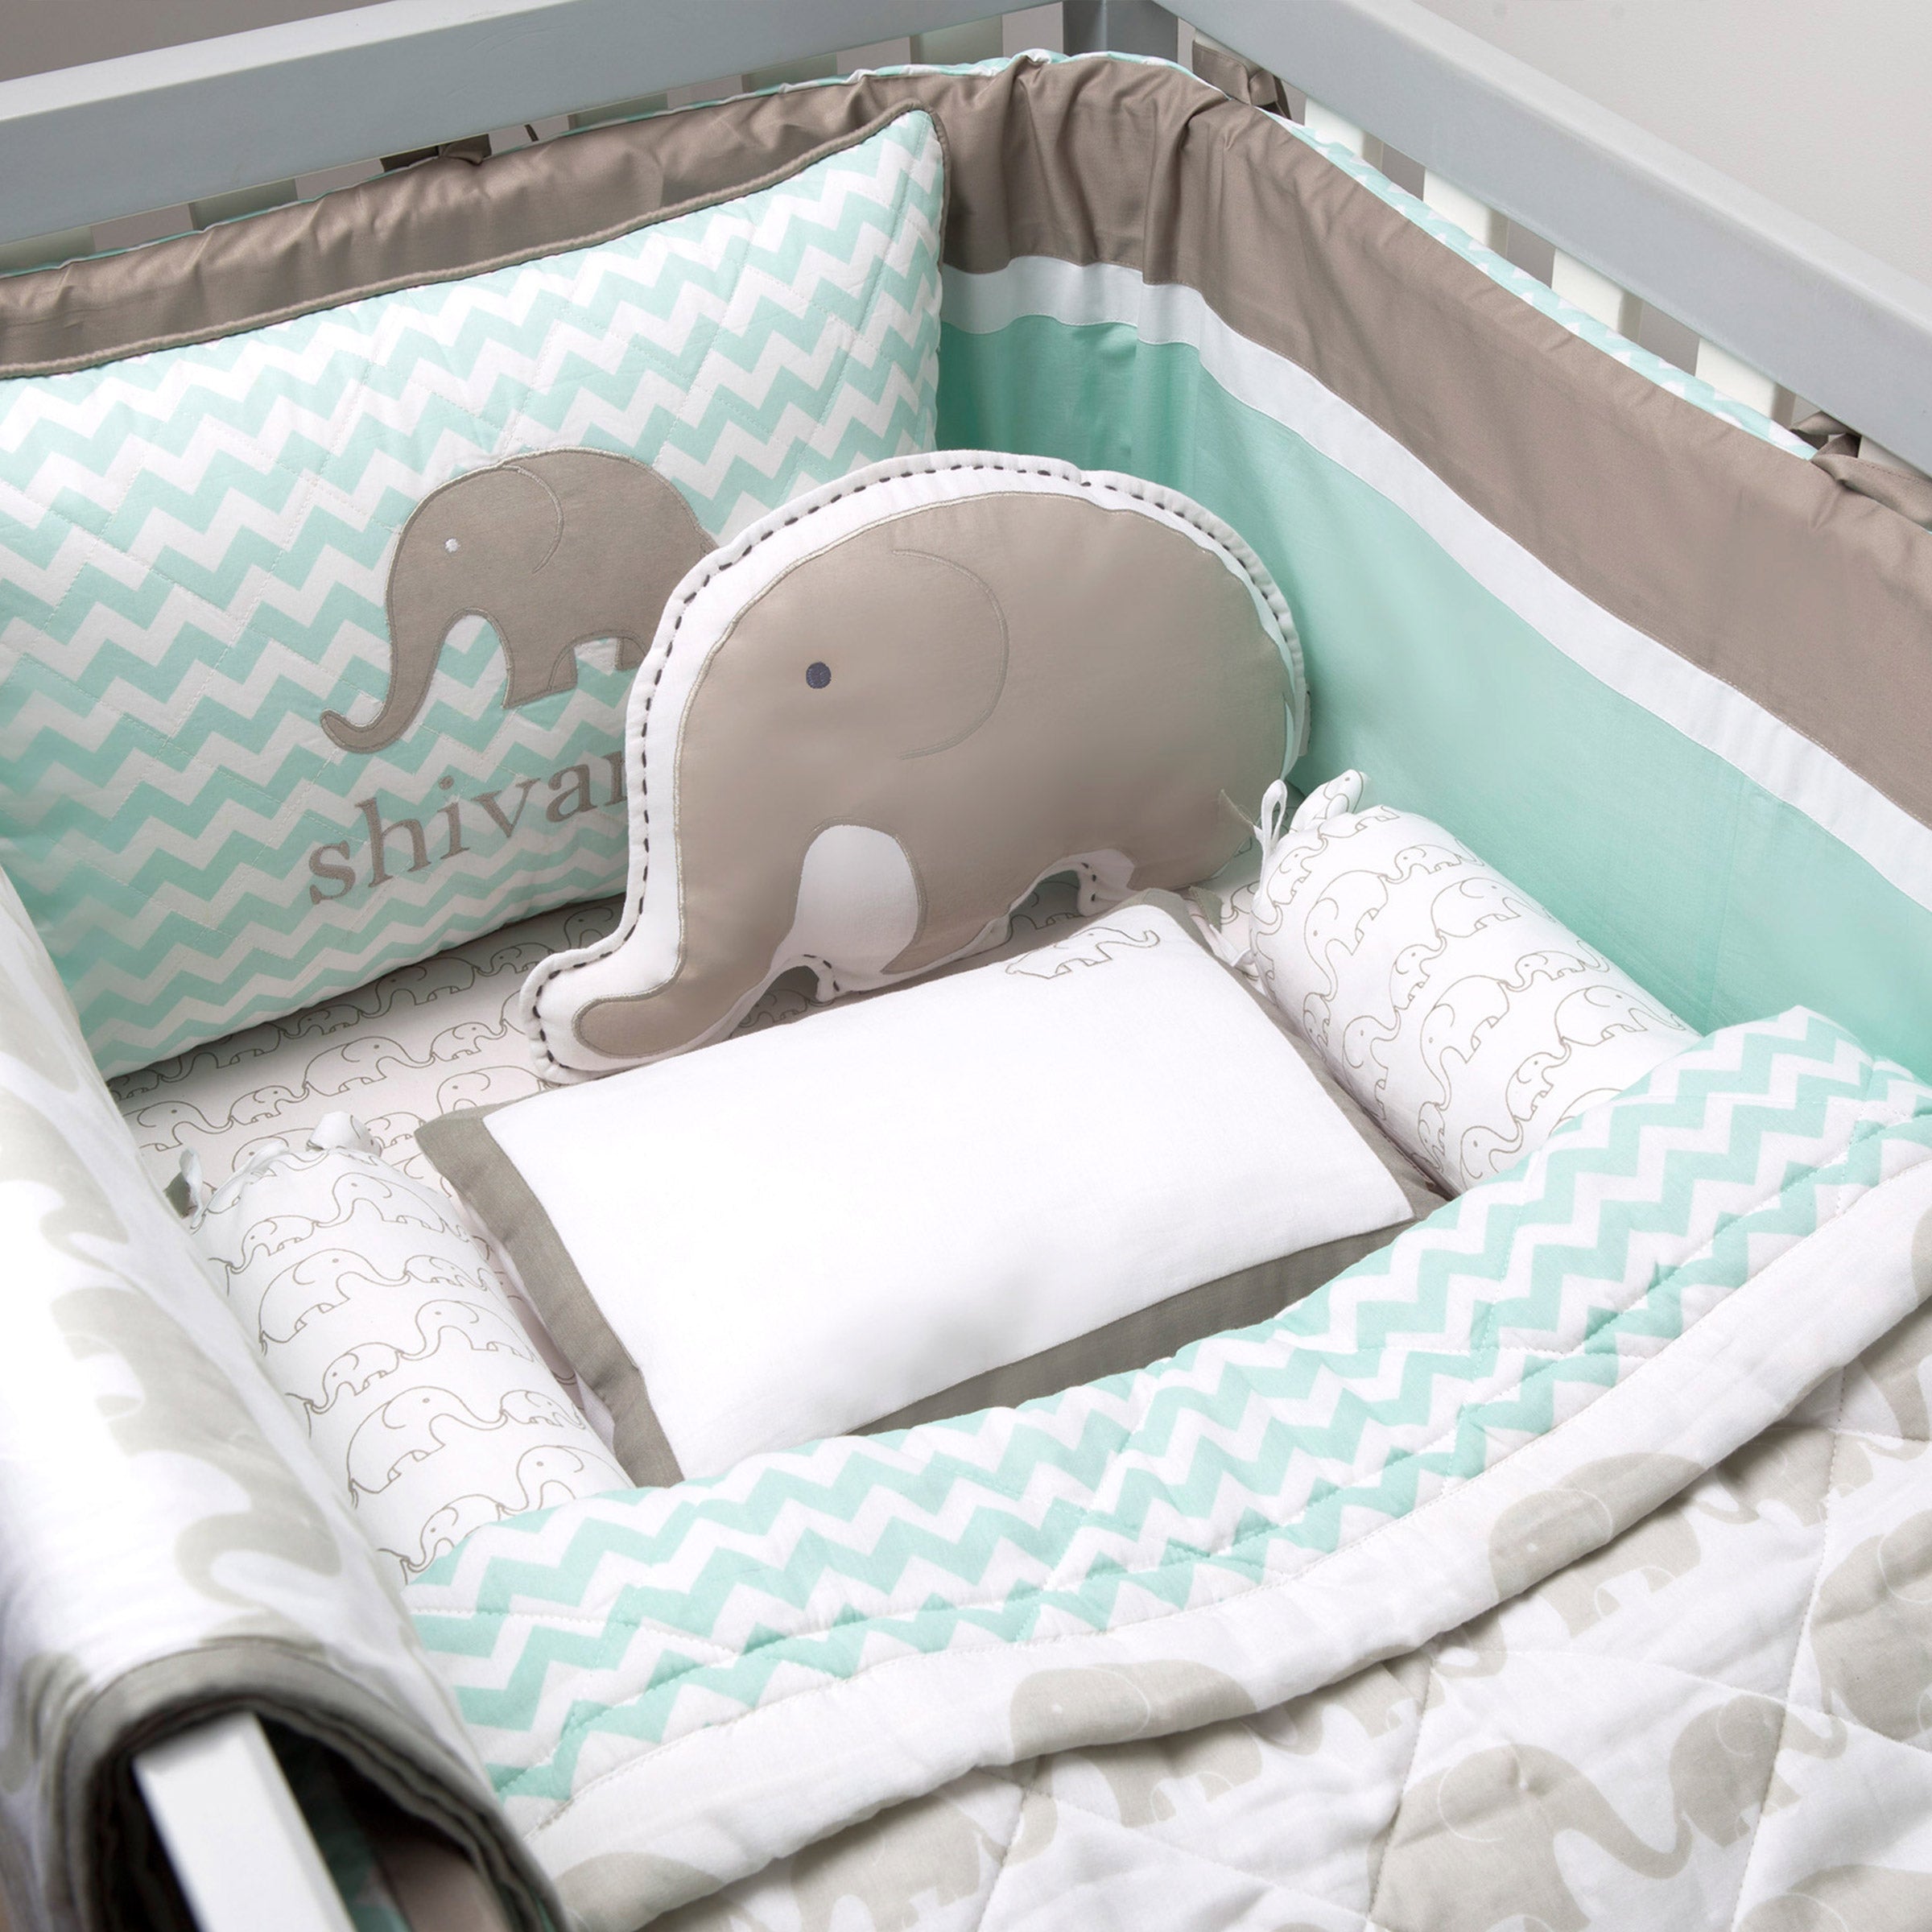 elephant cot bedding